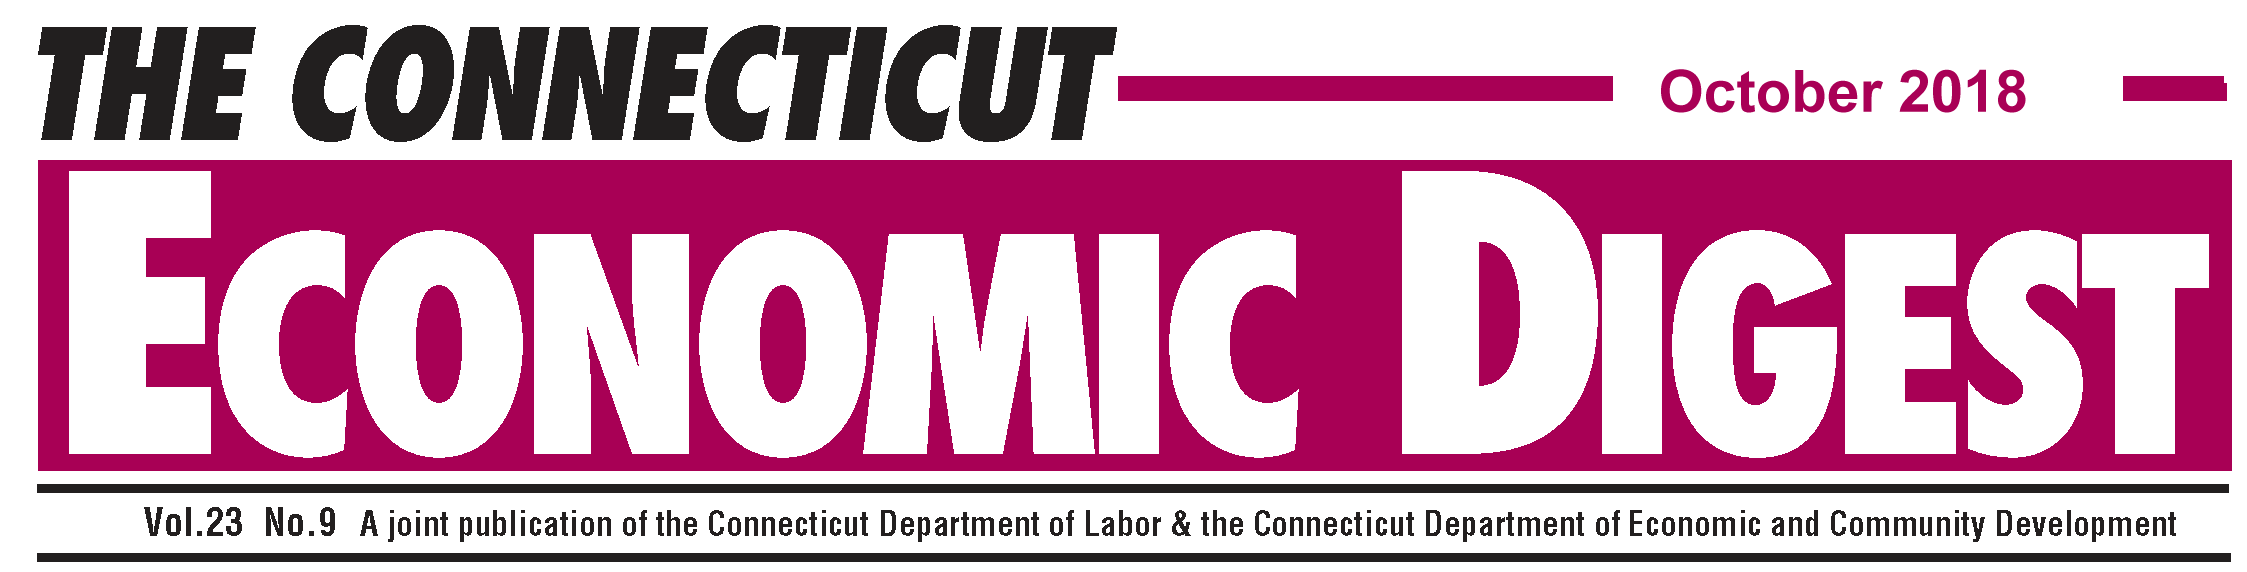 October 2018 Connecticut Economic Digest